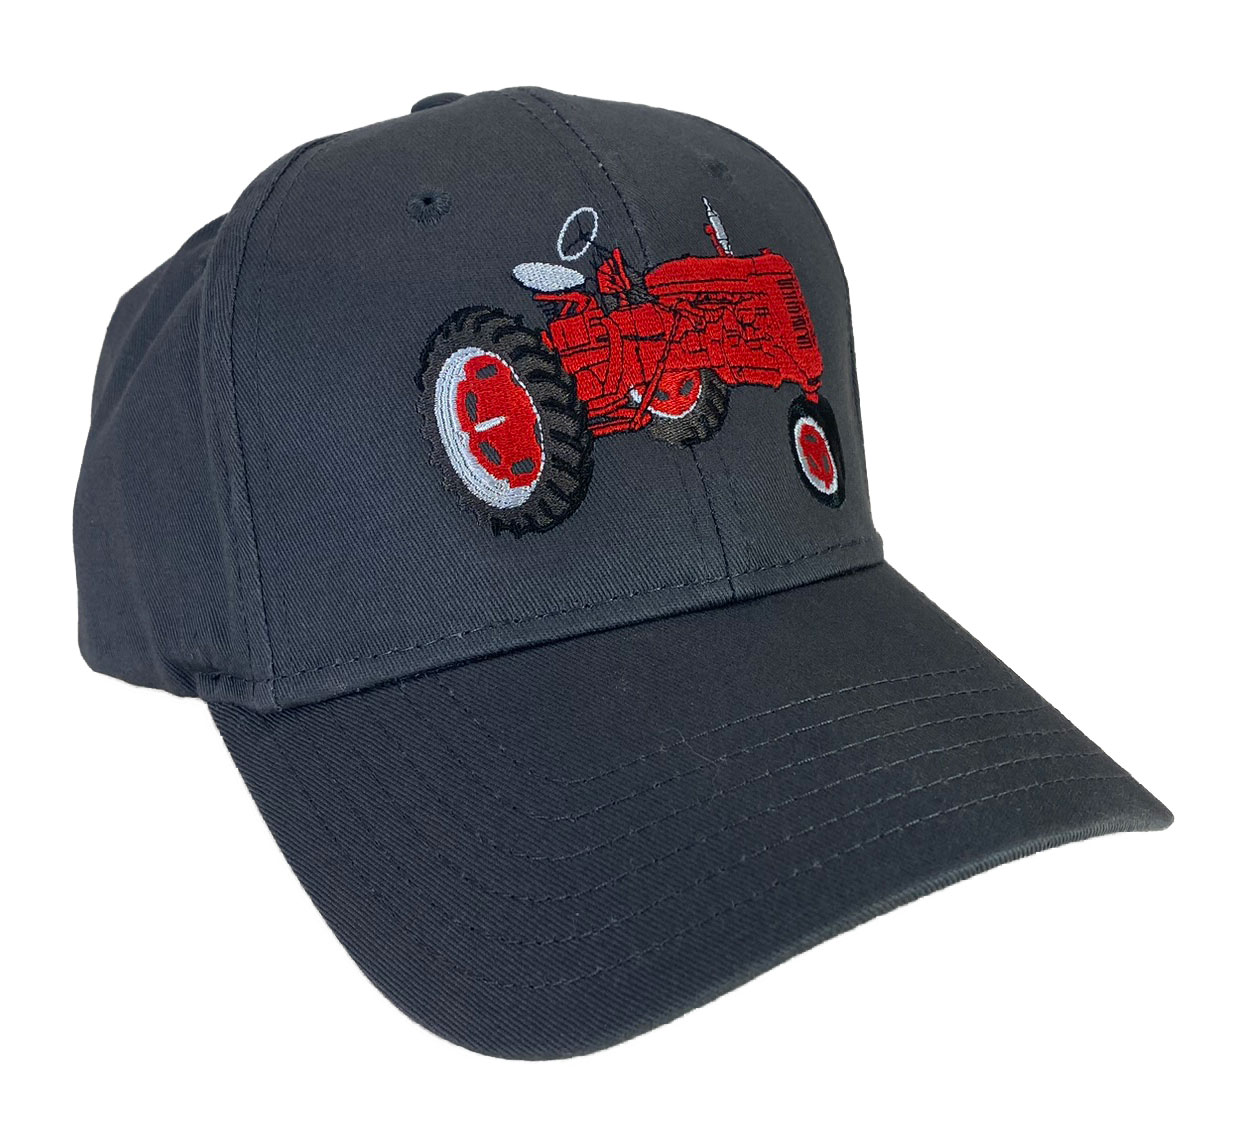 International McCormick Farmall Red Tractor Embroidered Cap Hat #44-8000CGV  - Locomotive Logos